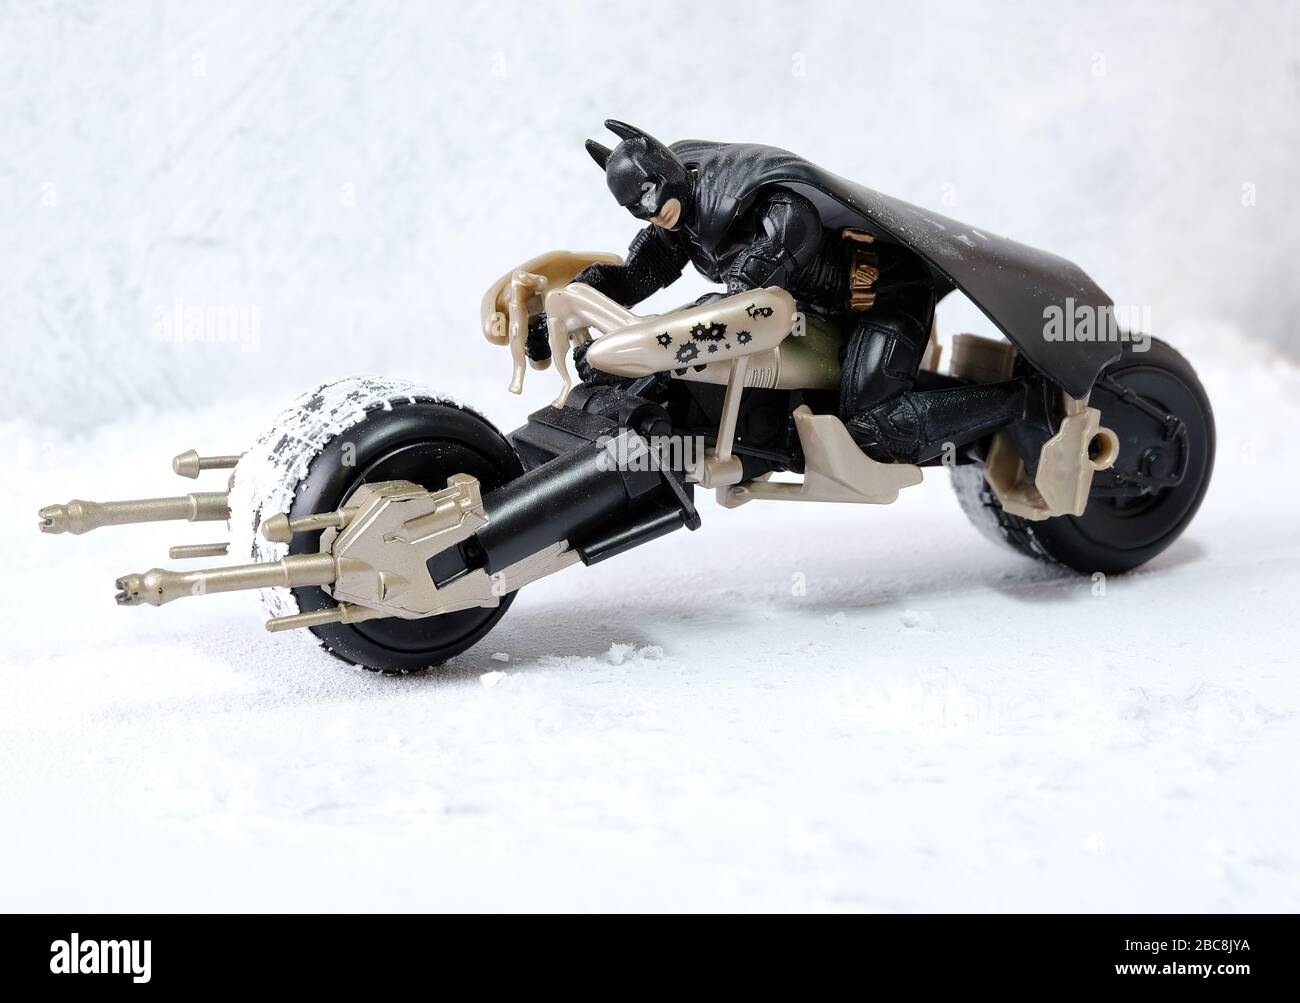 Batman on a his motorbike Stock Photo - Alamy